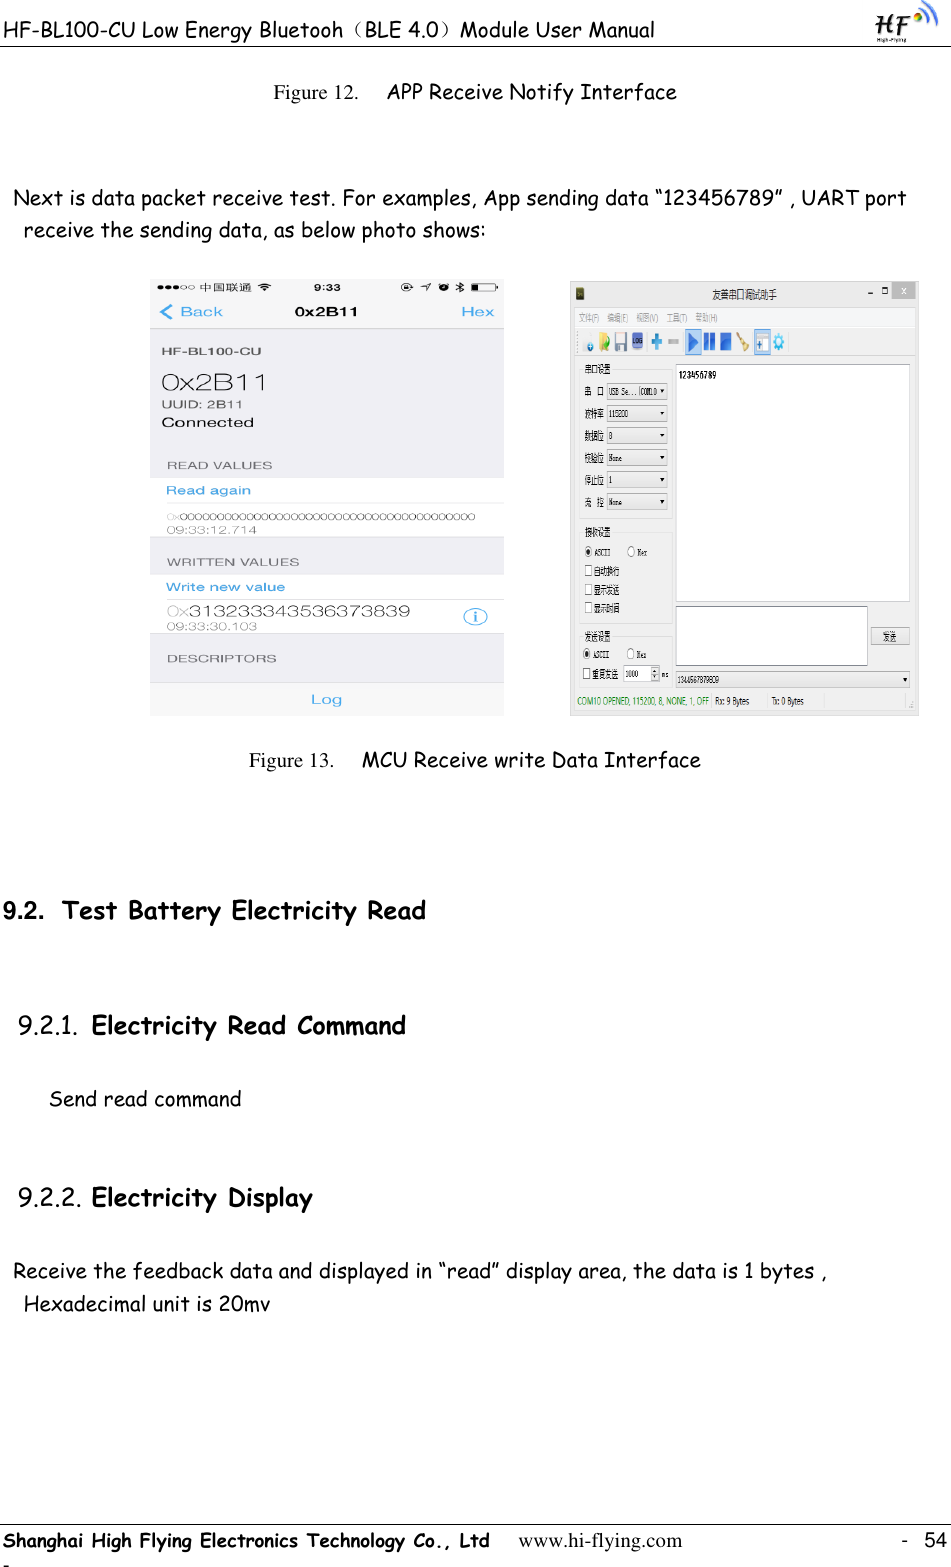 HF-BL100-CU Low Energy Bluetooh（BLE 4.0）Module User Manual Shanghai High Flying Electronics Technology Co., Ltd     www.hi-flying.com    -  54 - Figure 12. APP Receive Notify Interface   Next is data packet receive test. For examples, App sending data “123456789” , UART port receive the sending data, as below photo shows:                    Figure 13. MCU Receive write Data Interface  9.2. Test Battery Electricity Read 9.2.1. Electricity Read Command Send read command 9.2.2. Electricity Display Receive the feedback data and displayed in “read” display area, the data is 1 bytes , Hexadecimal unit is 20mv  